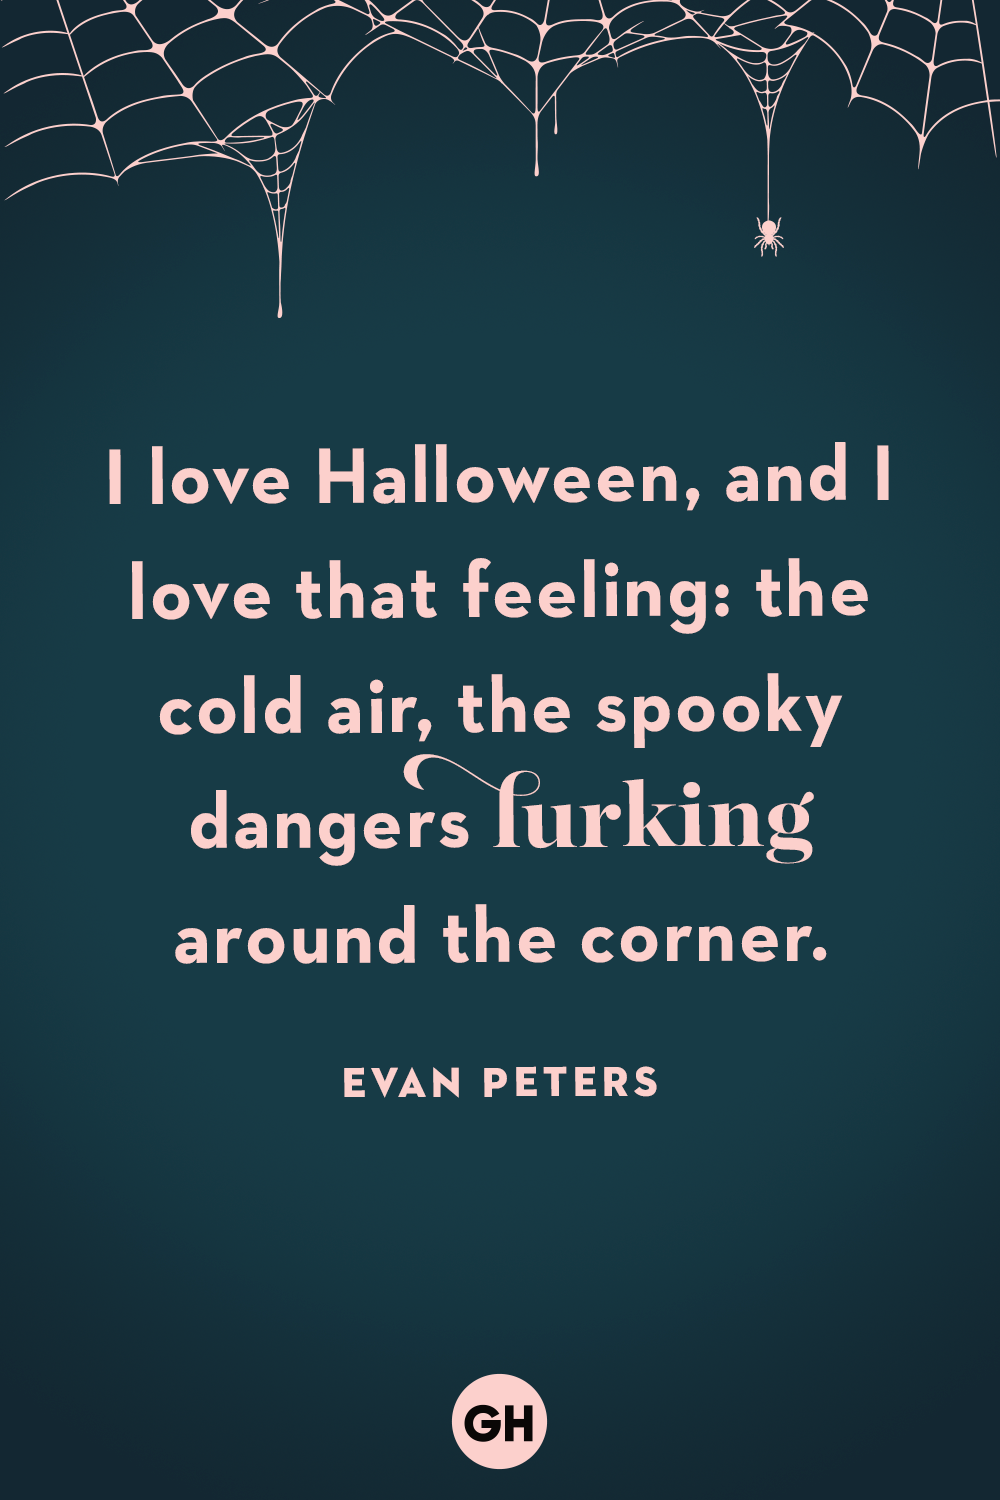 Spooky Halloween Quotes Halloween Sayings